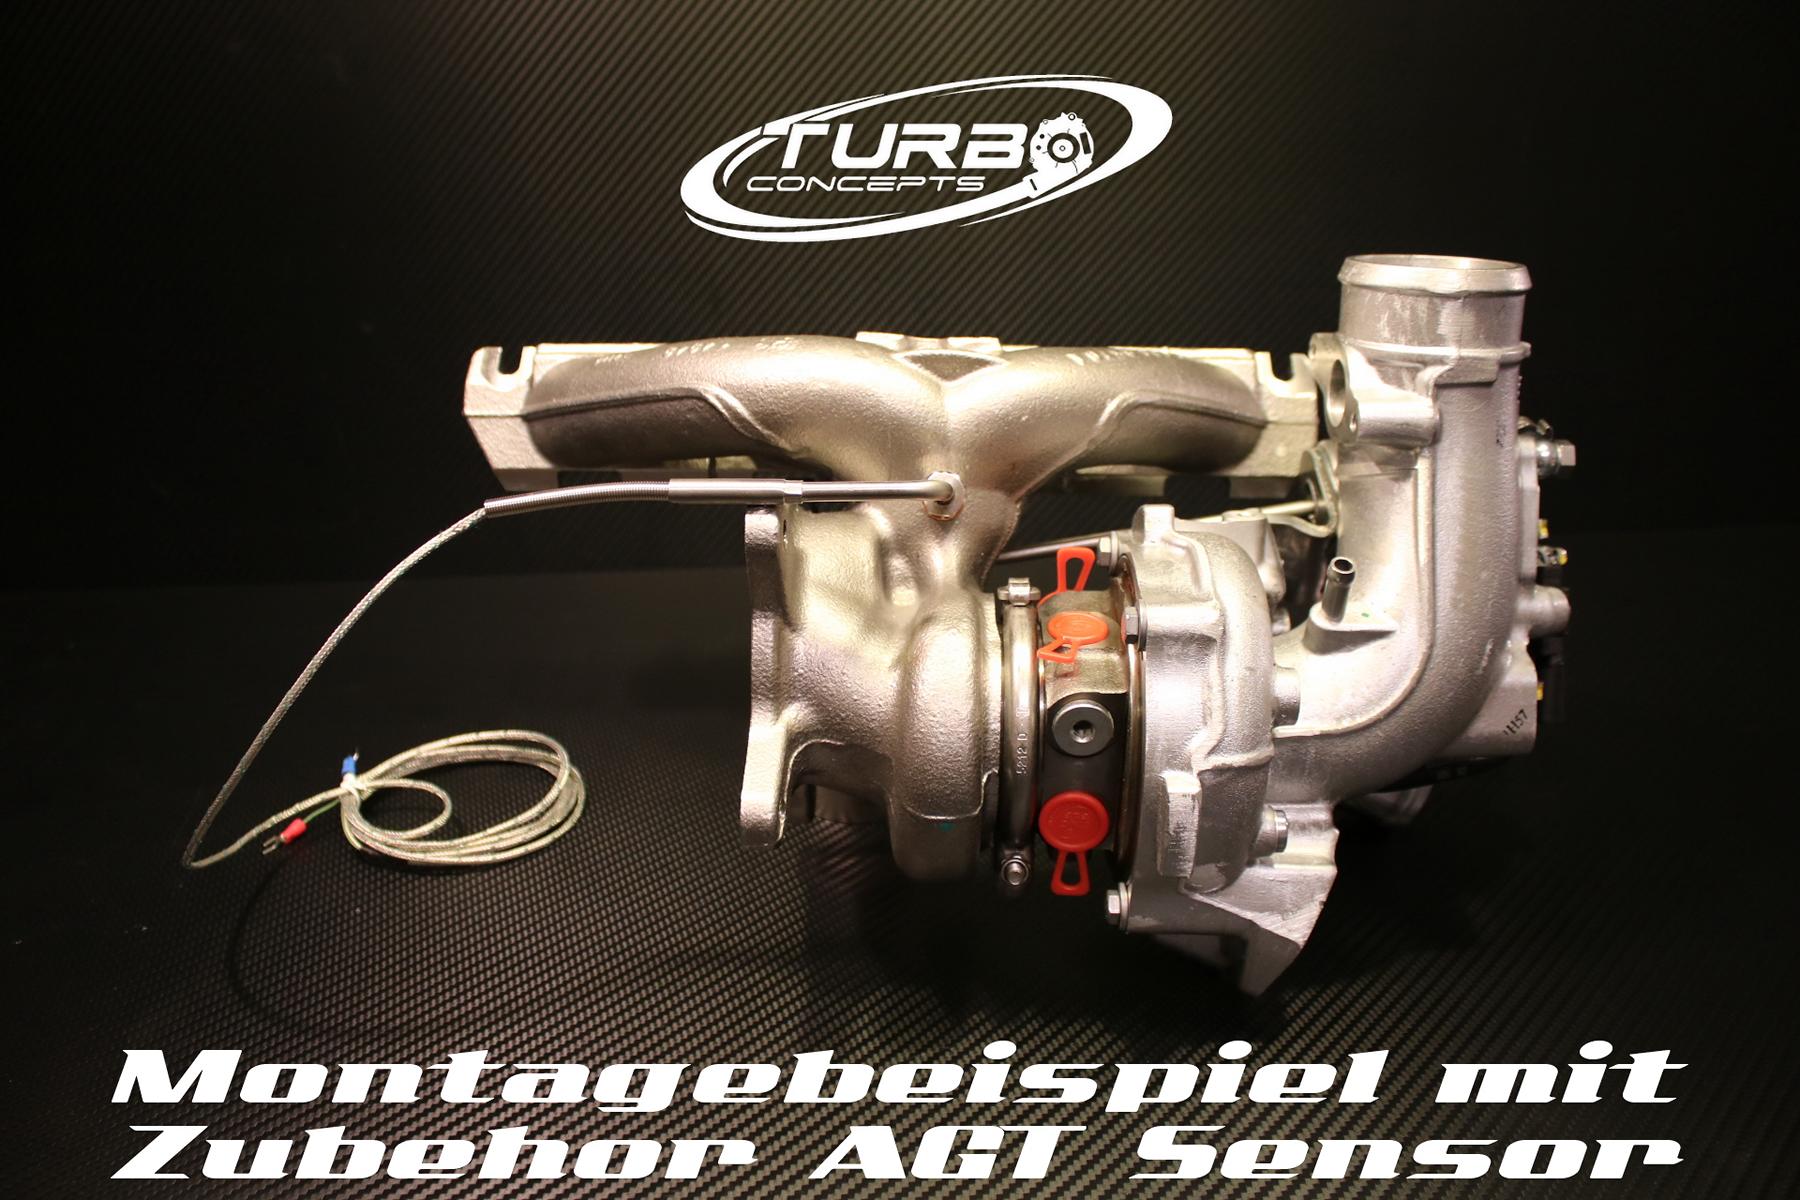 K04.064 Plus X - RS Upgrade Turbo 450PS im 2.0TFSi  quer S3 / TTs / Leon Cupra R / Golf 5 6 Edition